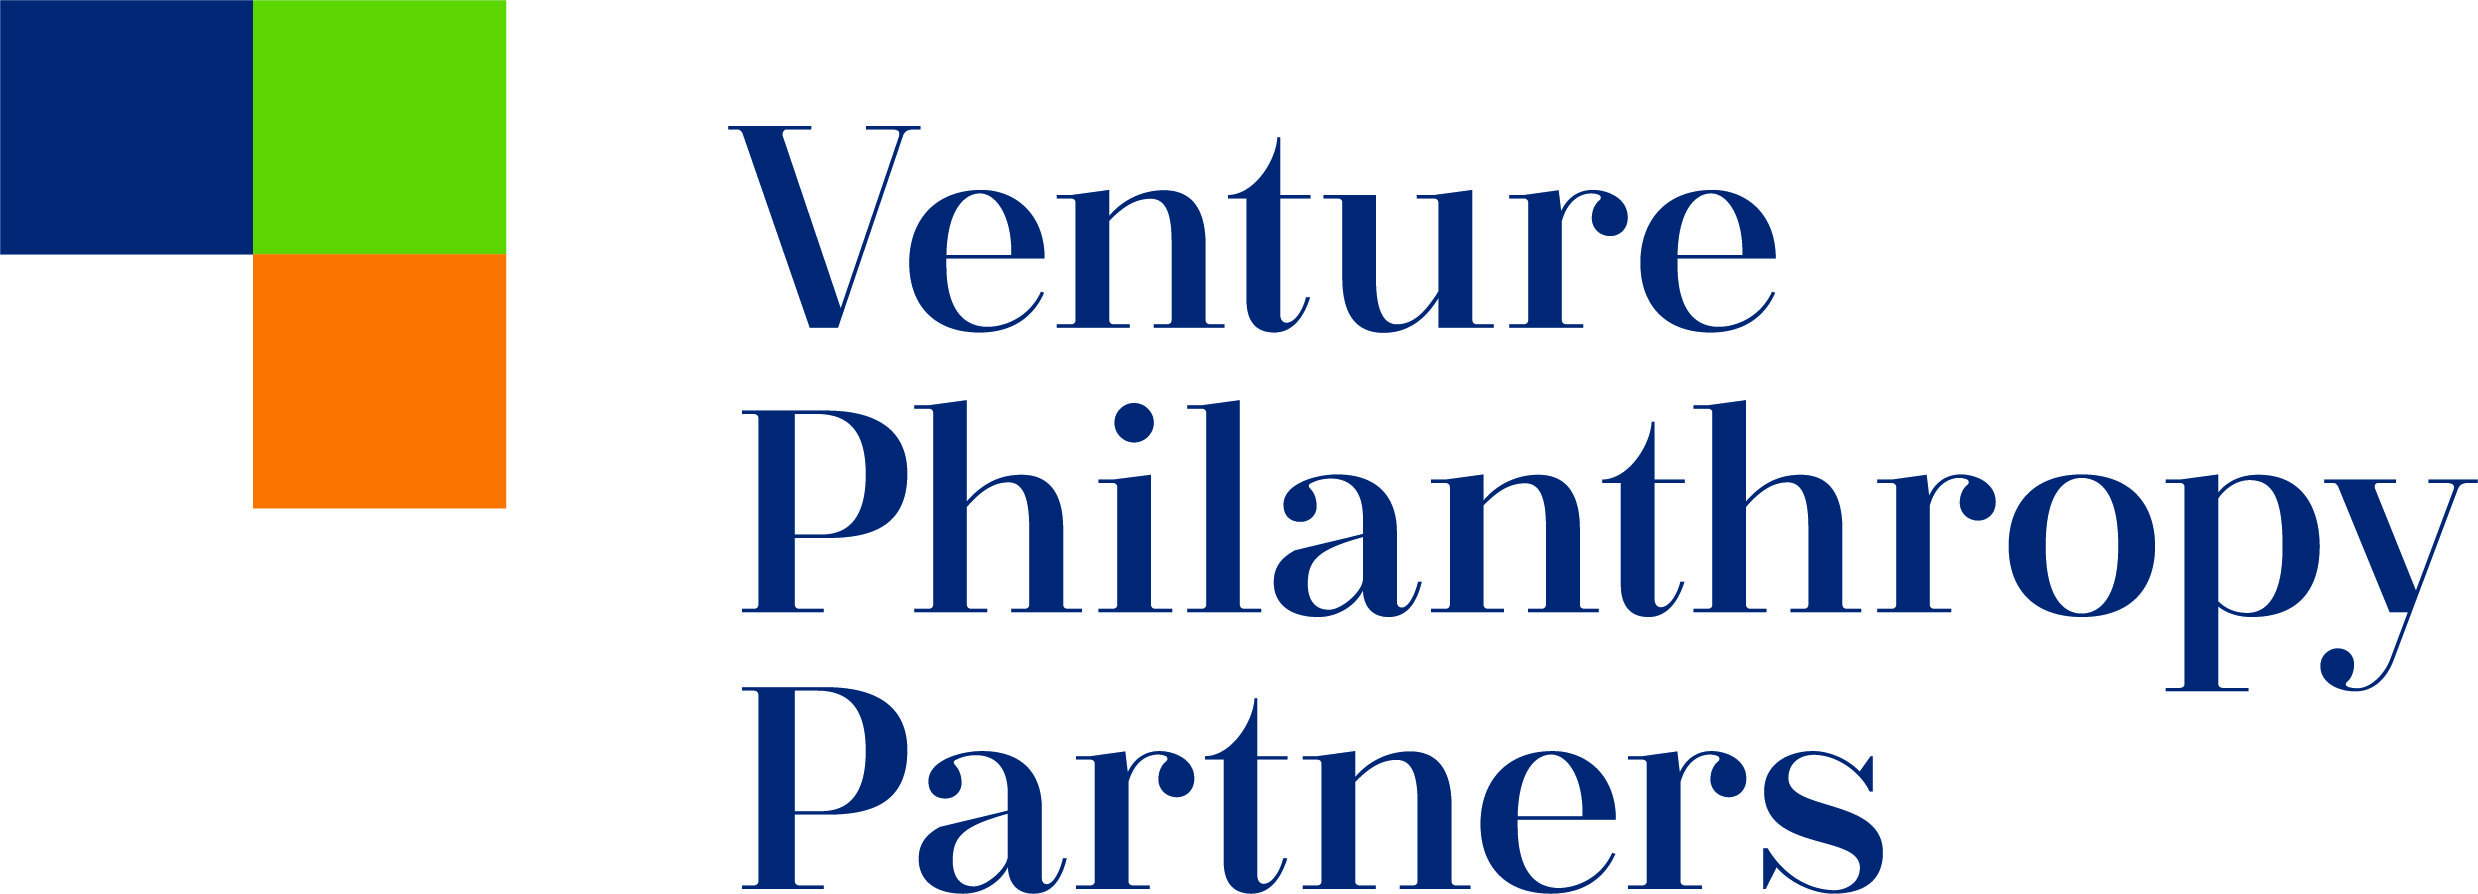 Venture Philanthropy Partners